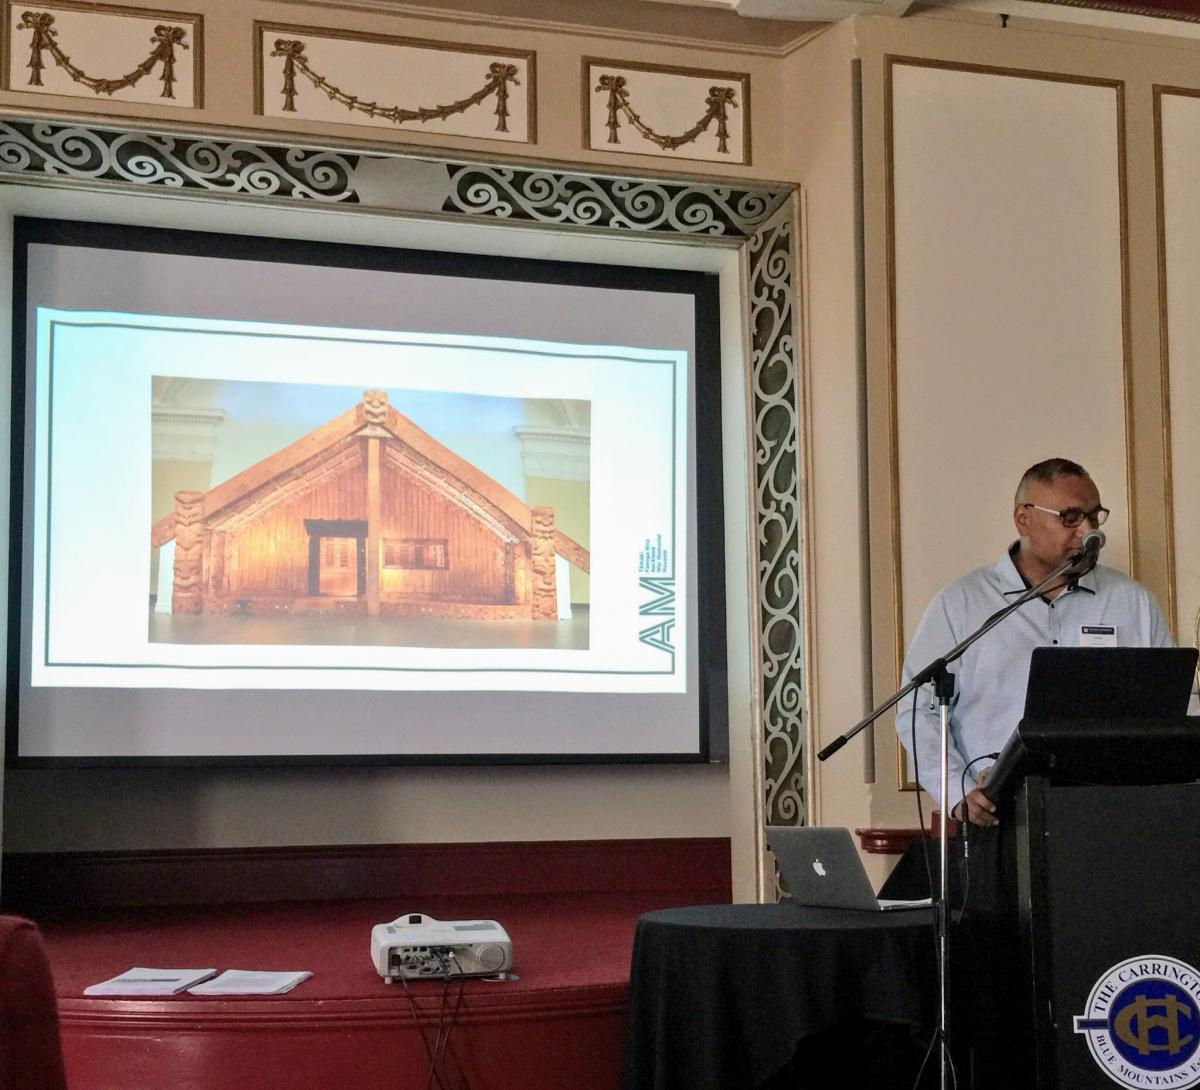 Don Pieta presenting on the Hotunui Preservation Project